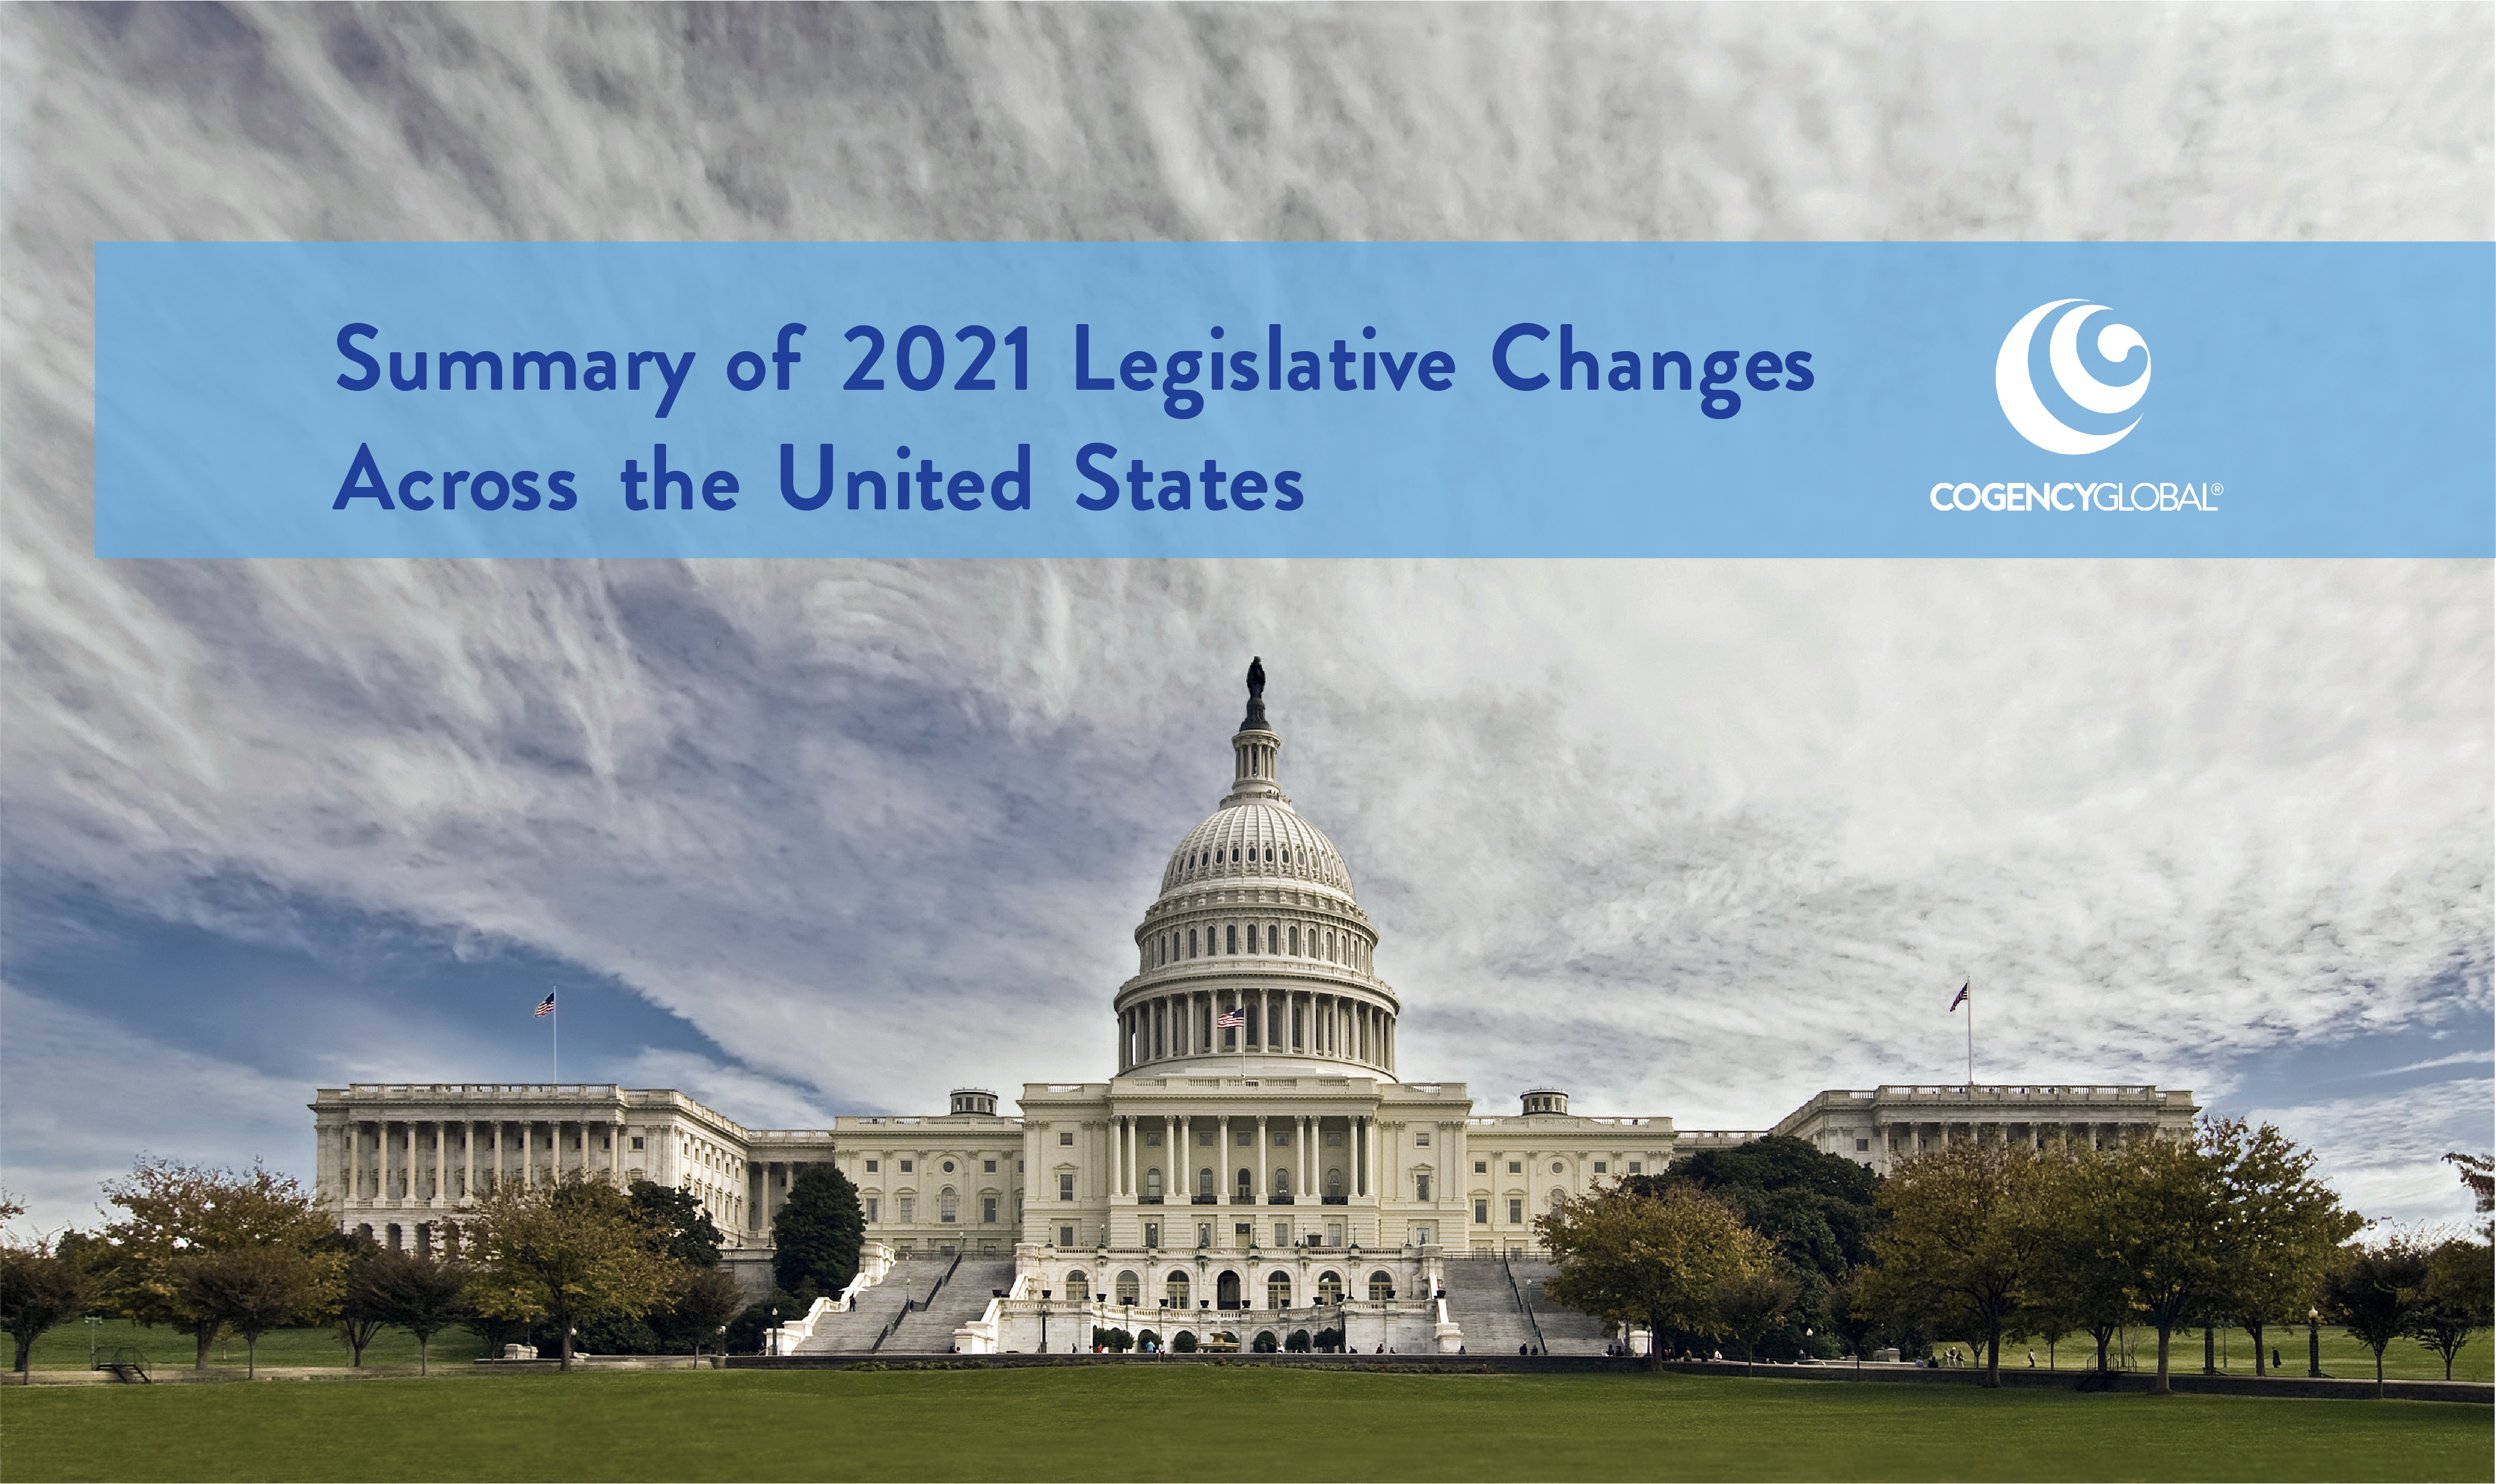 Summary of 2021 Legislative Changes Across the United States